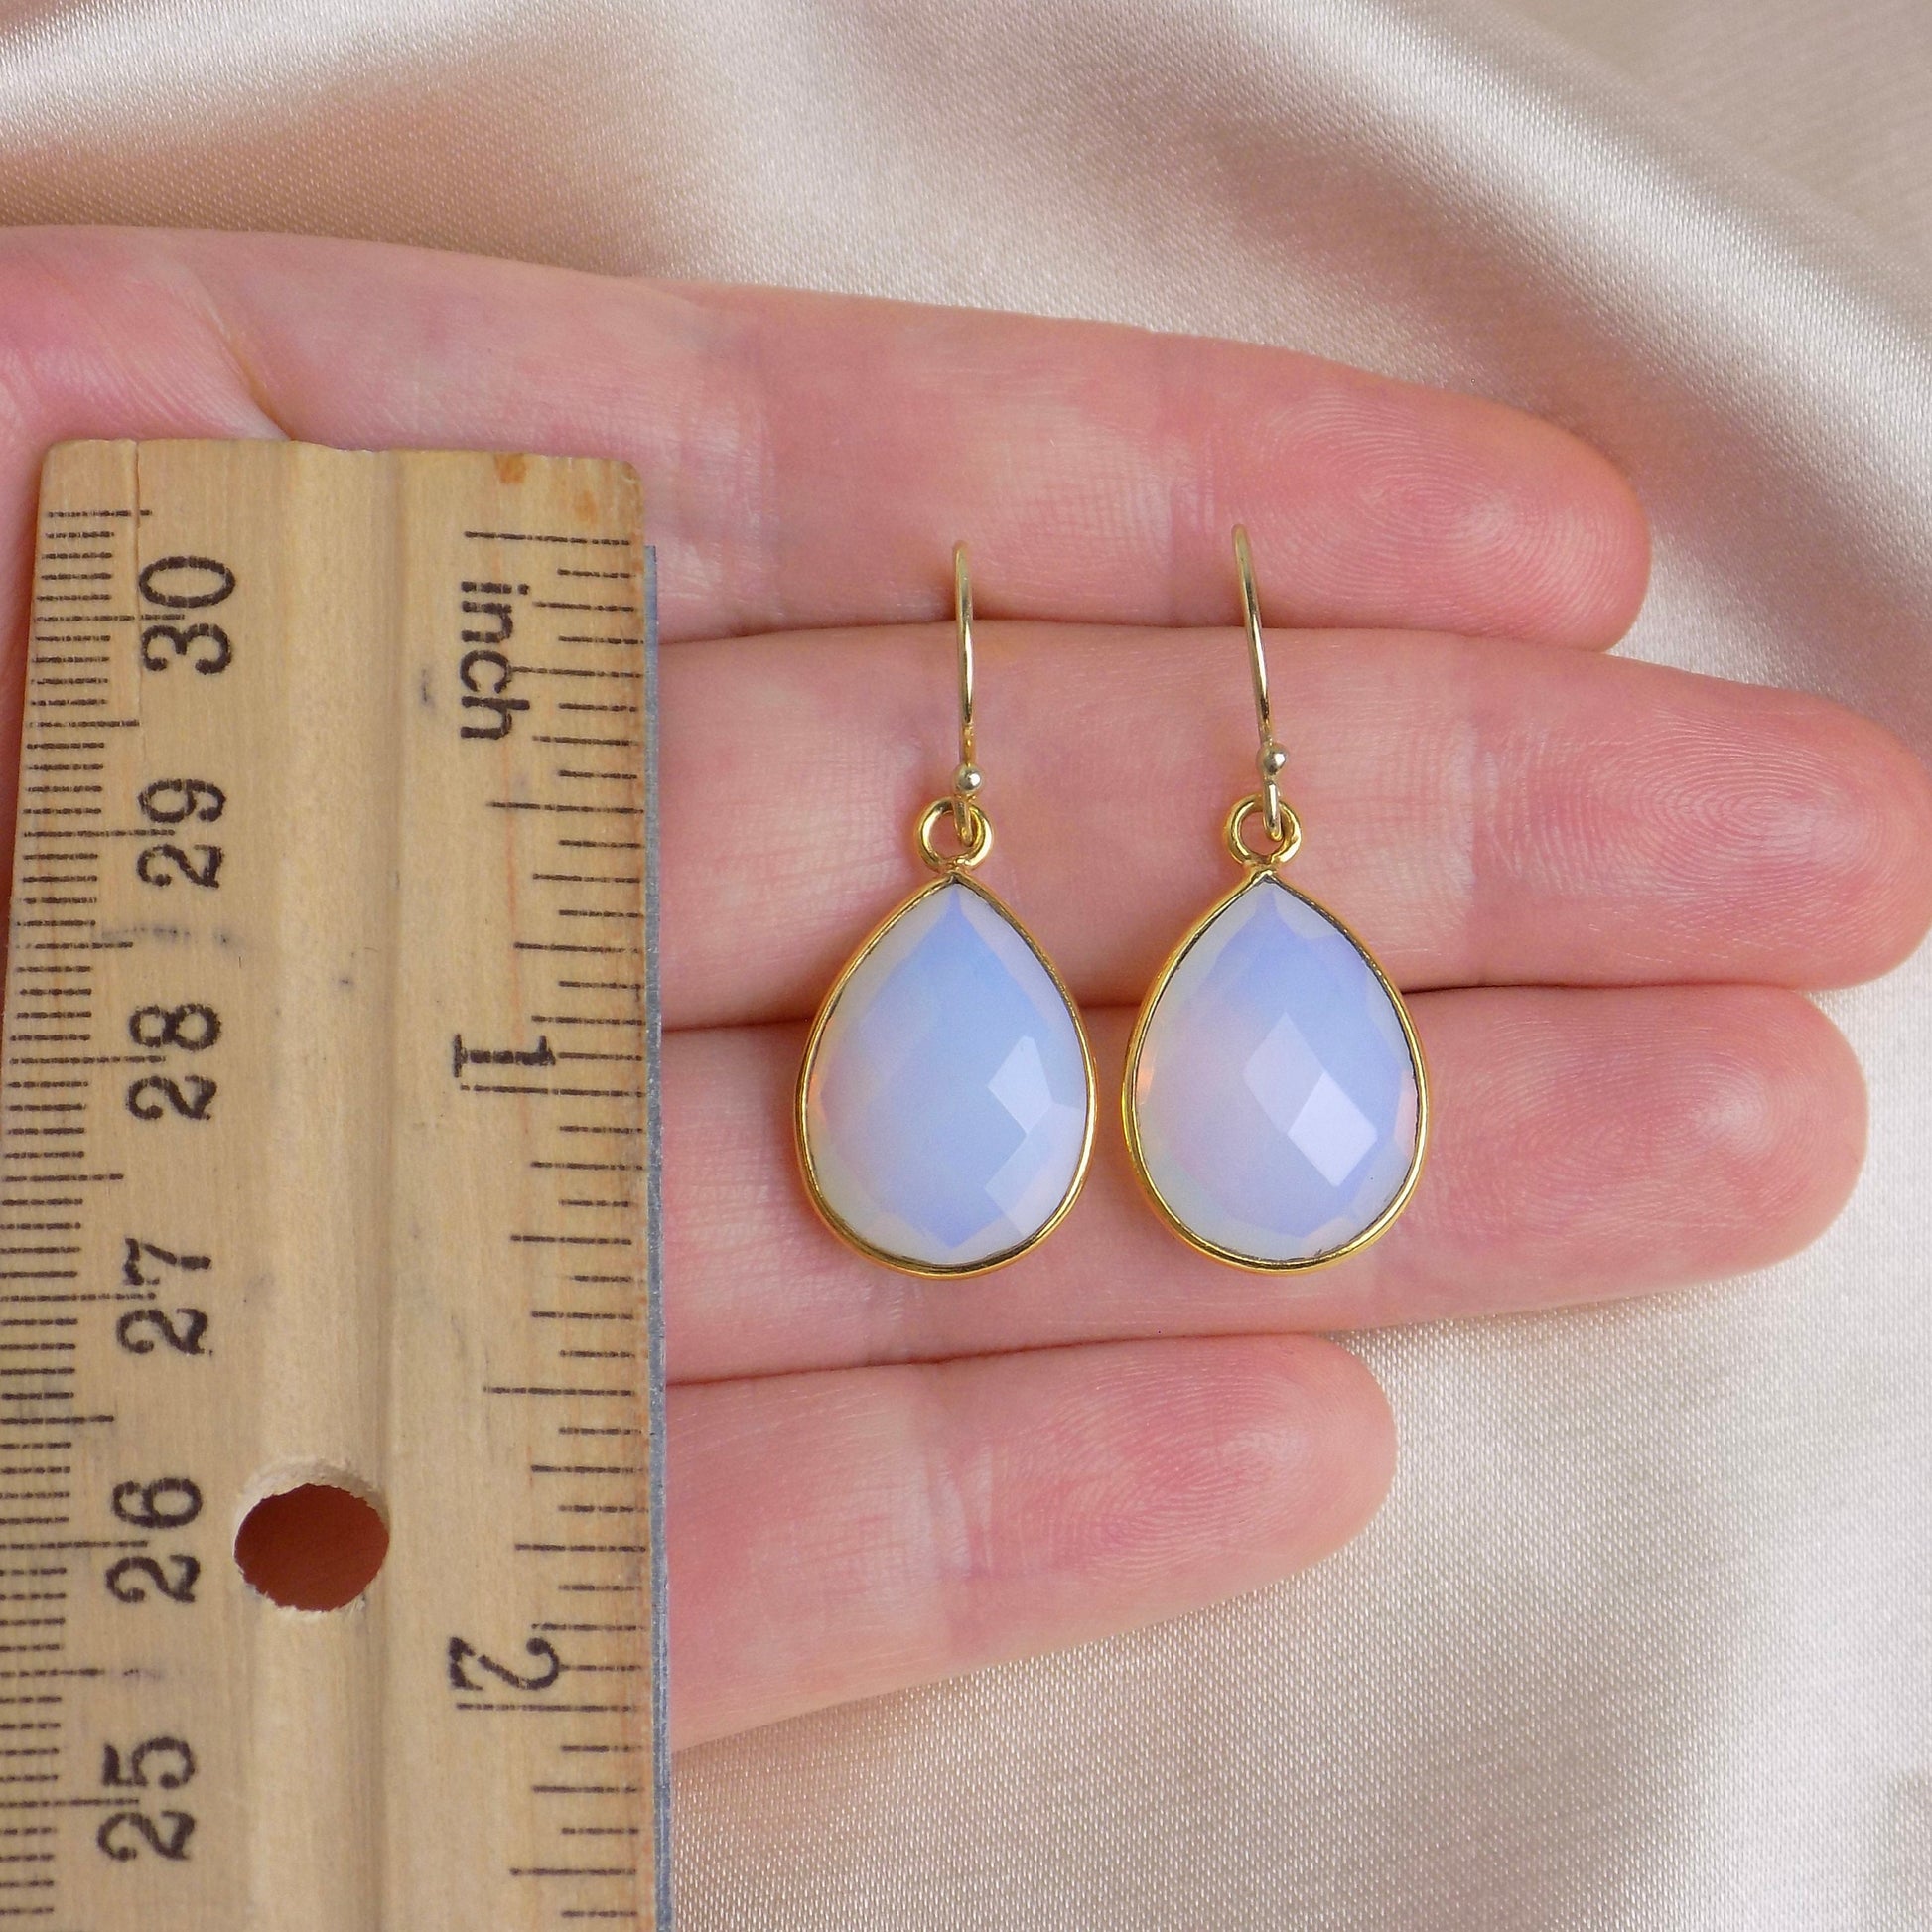 Teardrop Opalite Earrings Gold, Opal Gemstone Drop Earring, Light Blue White Crystal, October Birthstone Gift For Mom, M6-614